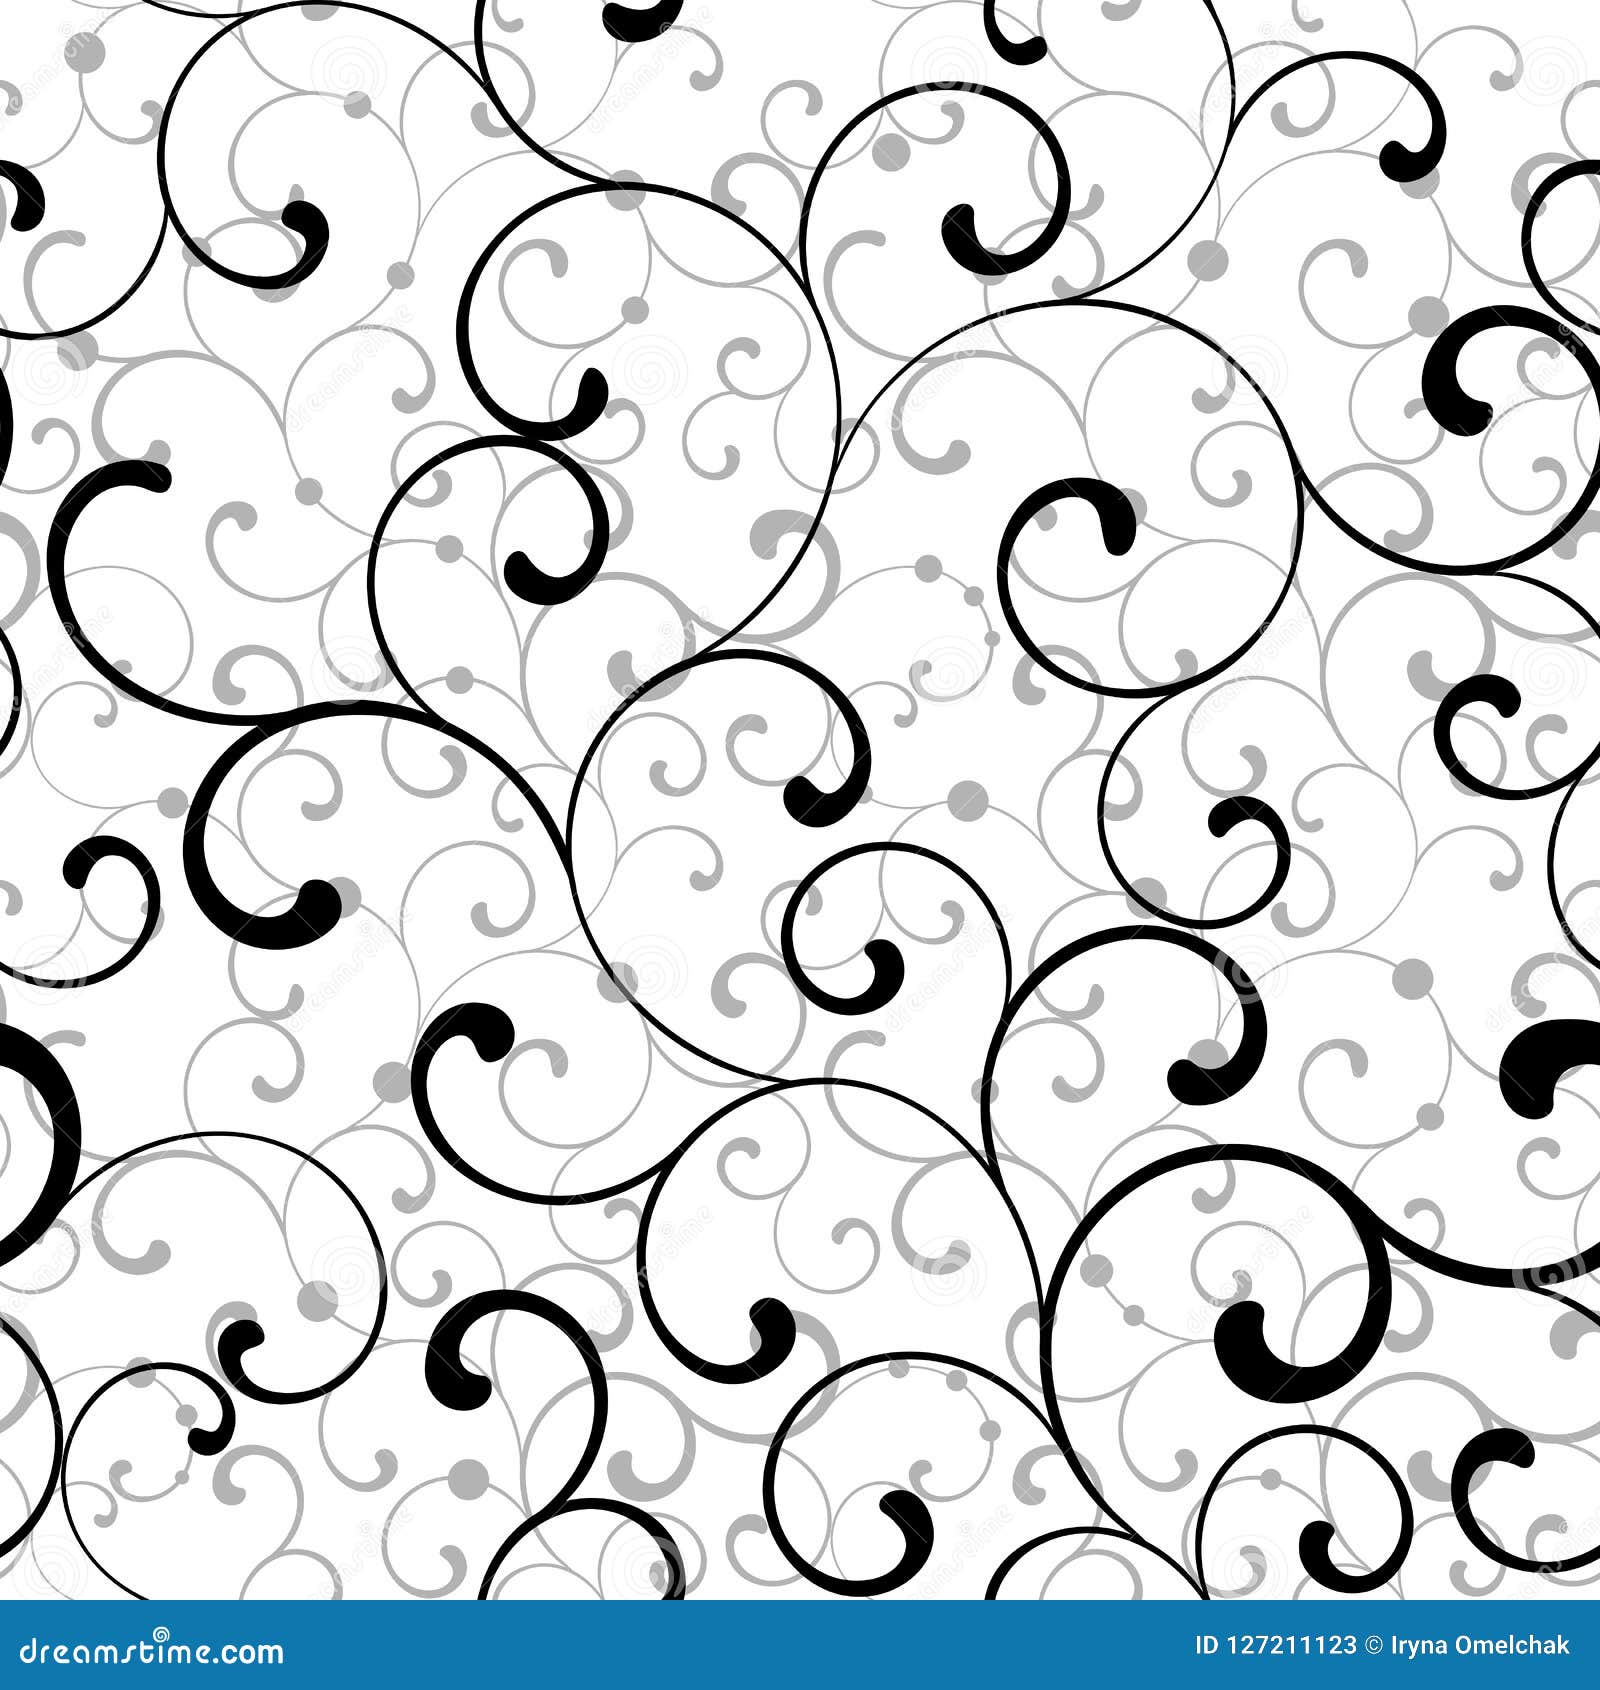 https://thumbs.dreamstime.com/z/elegant-seamless-pattern-swirls-white-background-elegant-seamless-pattern-swirls-white-background-texture-127211123.jpg